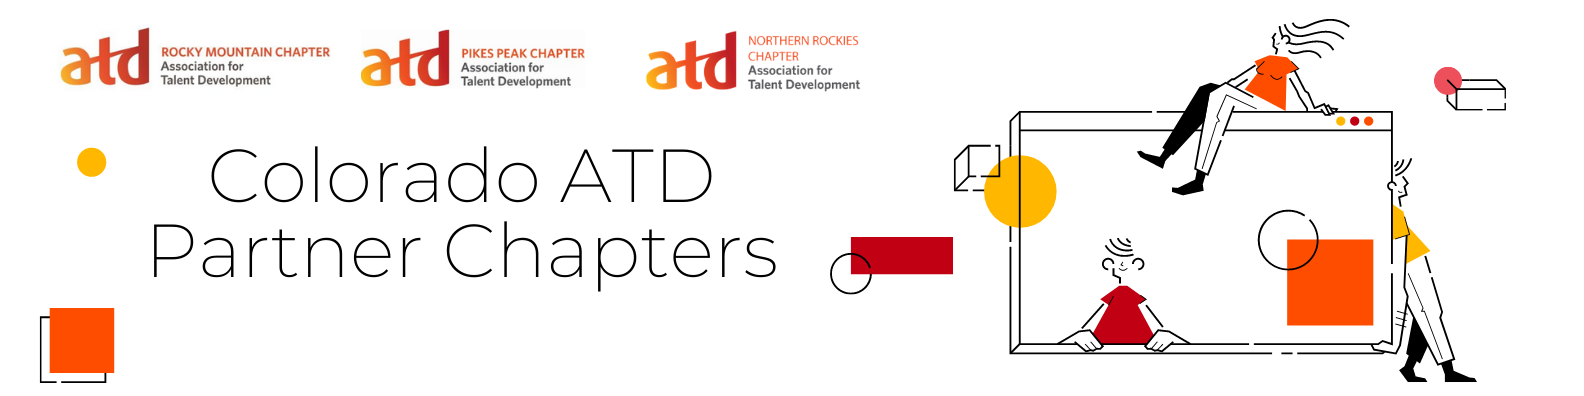 Colorado ATD Partner Chapters